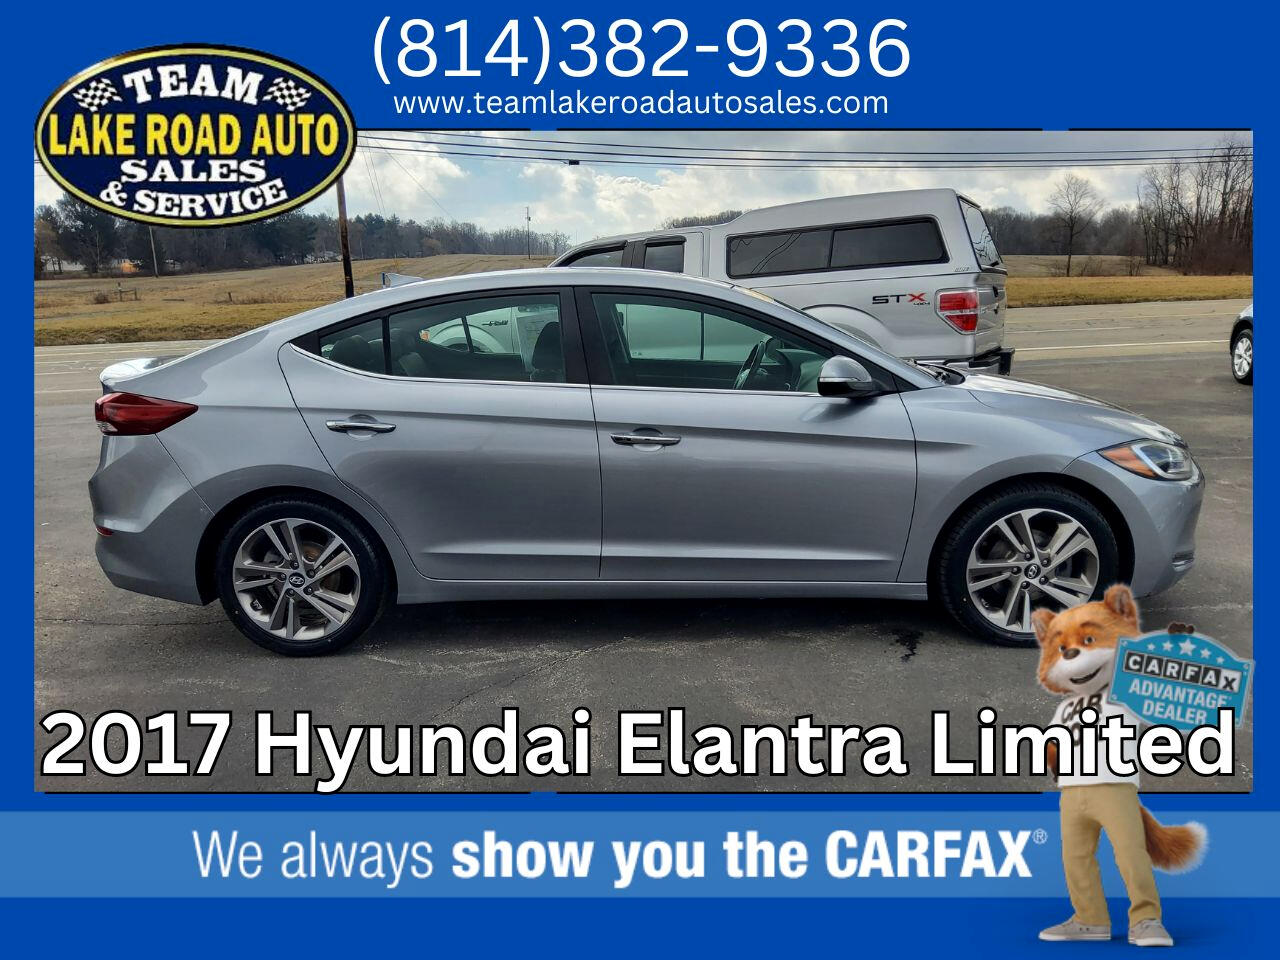 2017 Hyundai Elantra Limited 2.0L Auto (Alabama) *Ltd Avail*